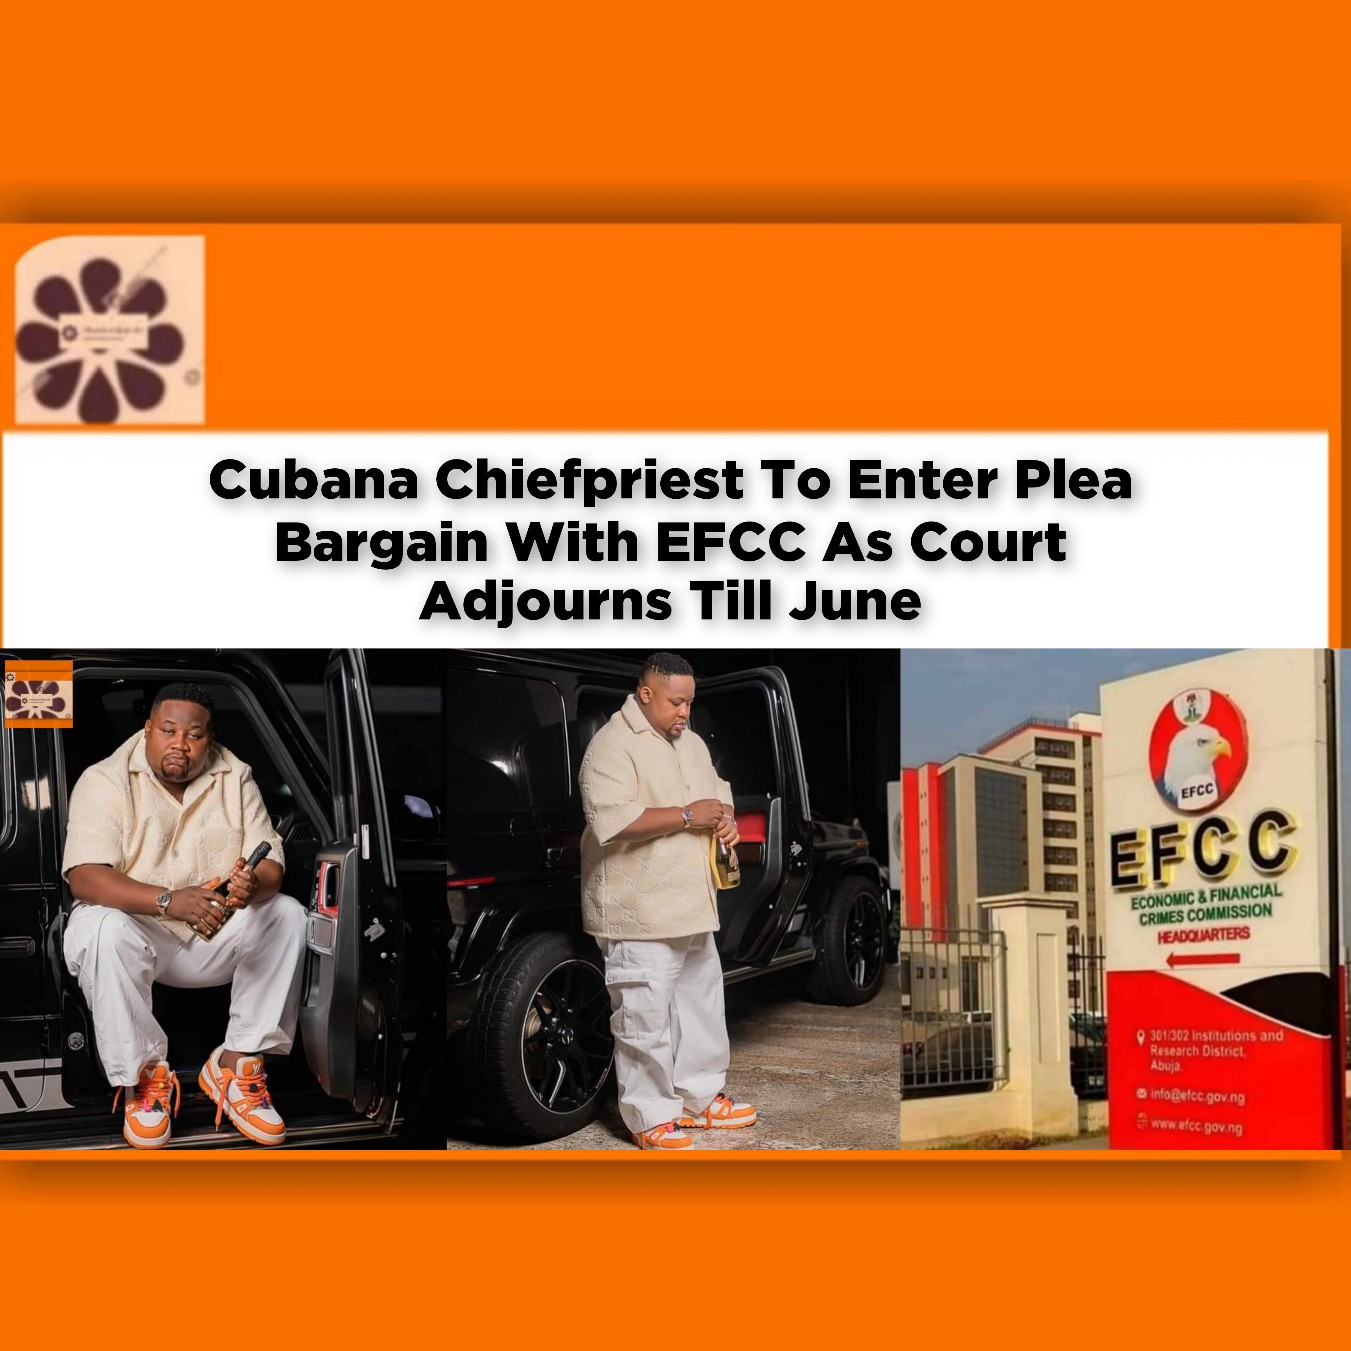 Cubana Chiefpriest To Enter Plea Bargain With EFCC As Court Adjourns Till June ~ OsazuwaAkonedo #Redesign